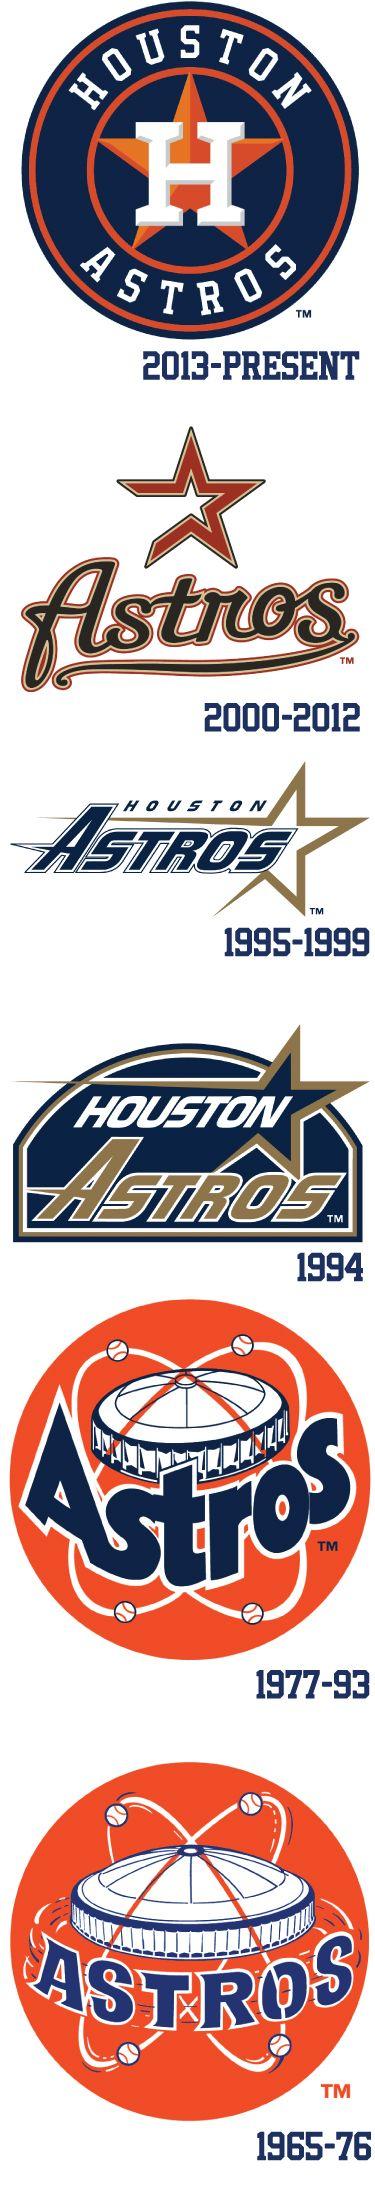 Astros Logo - Astros Logo History | Houston Astros